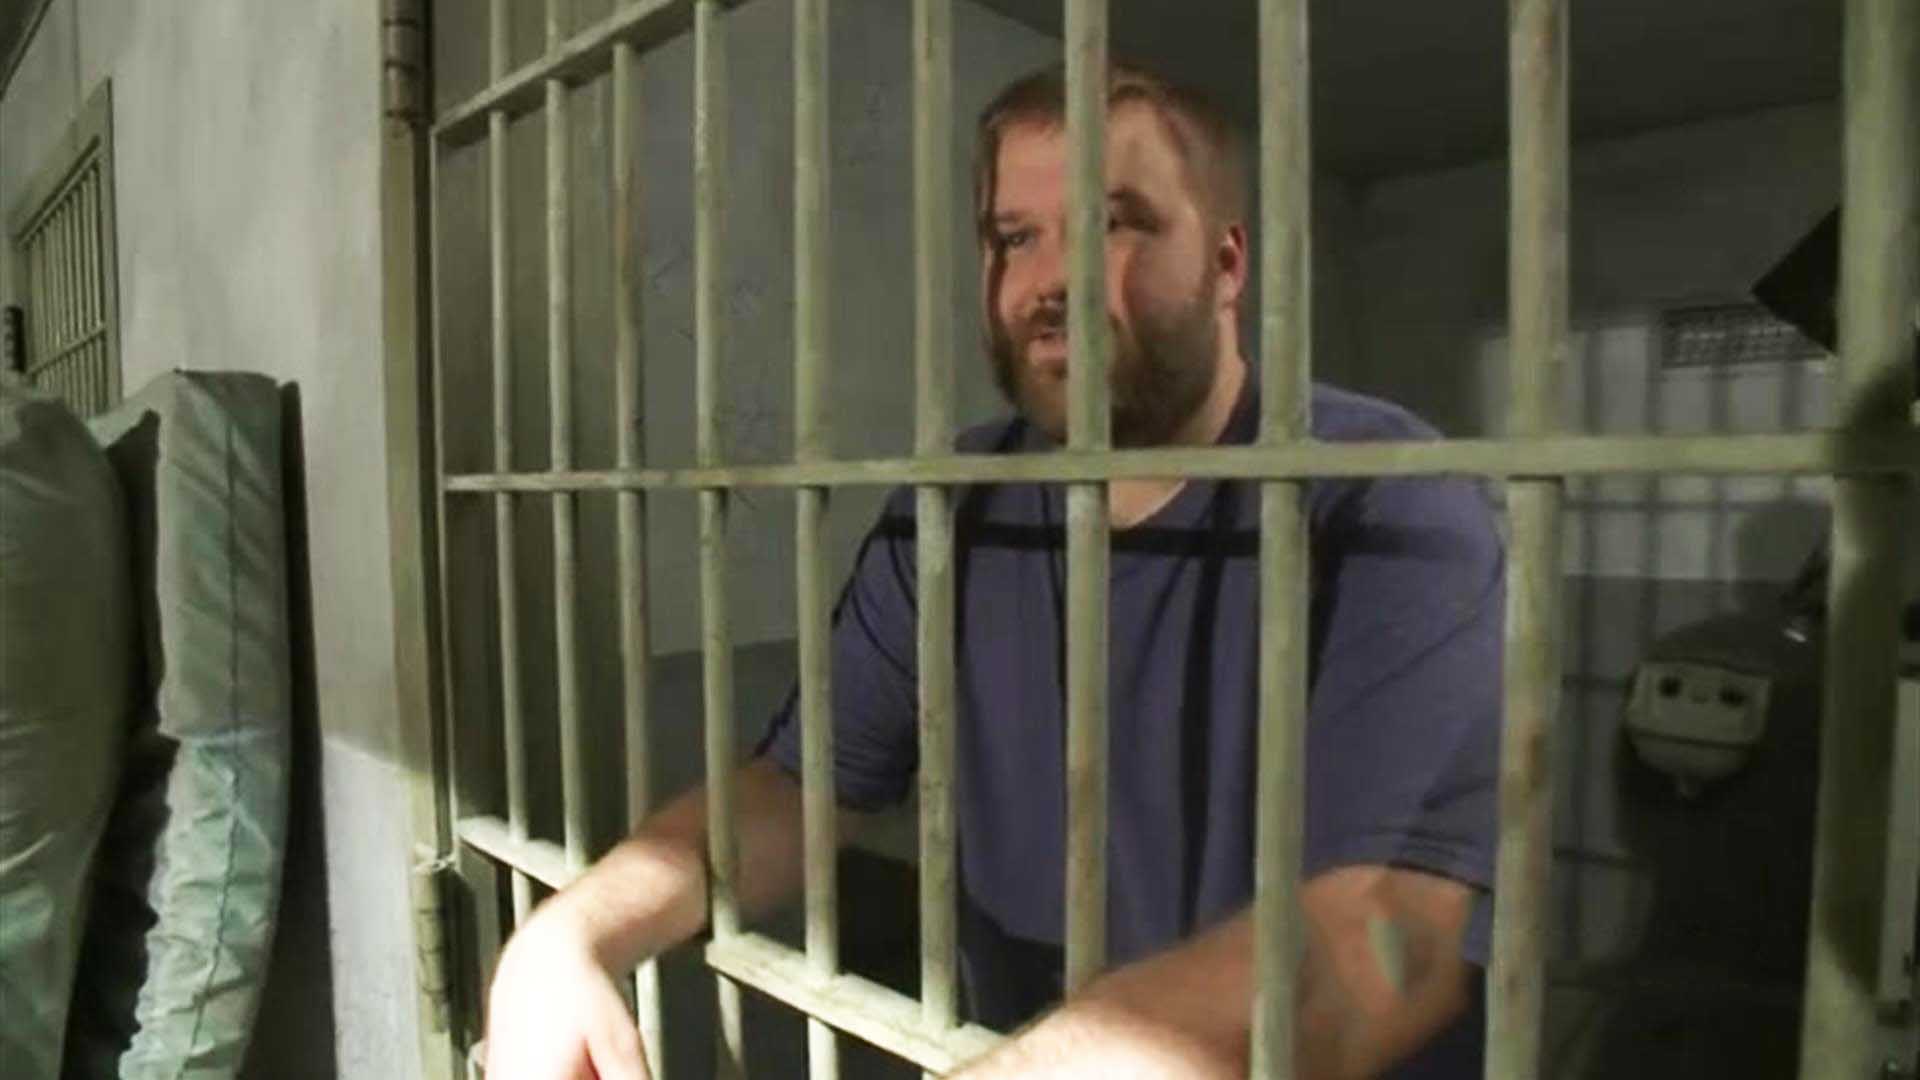 Inside the prison photo